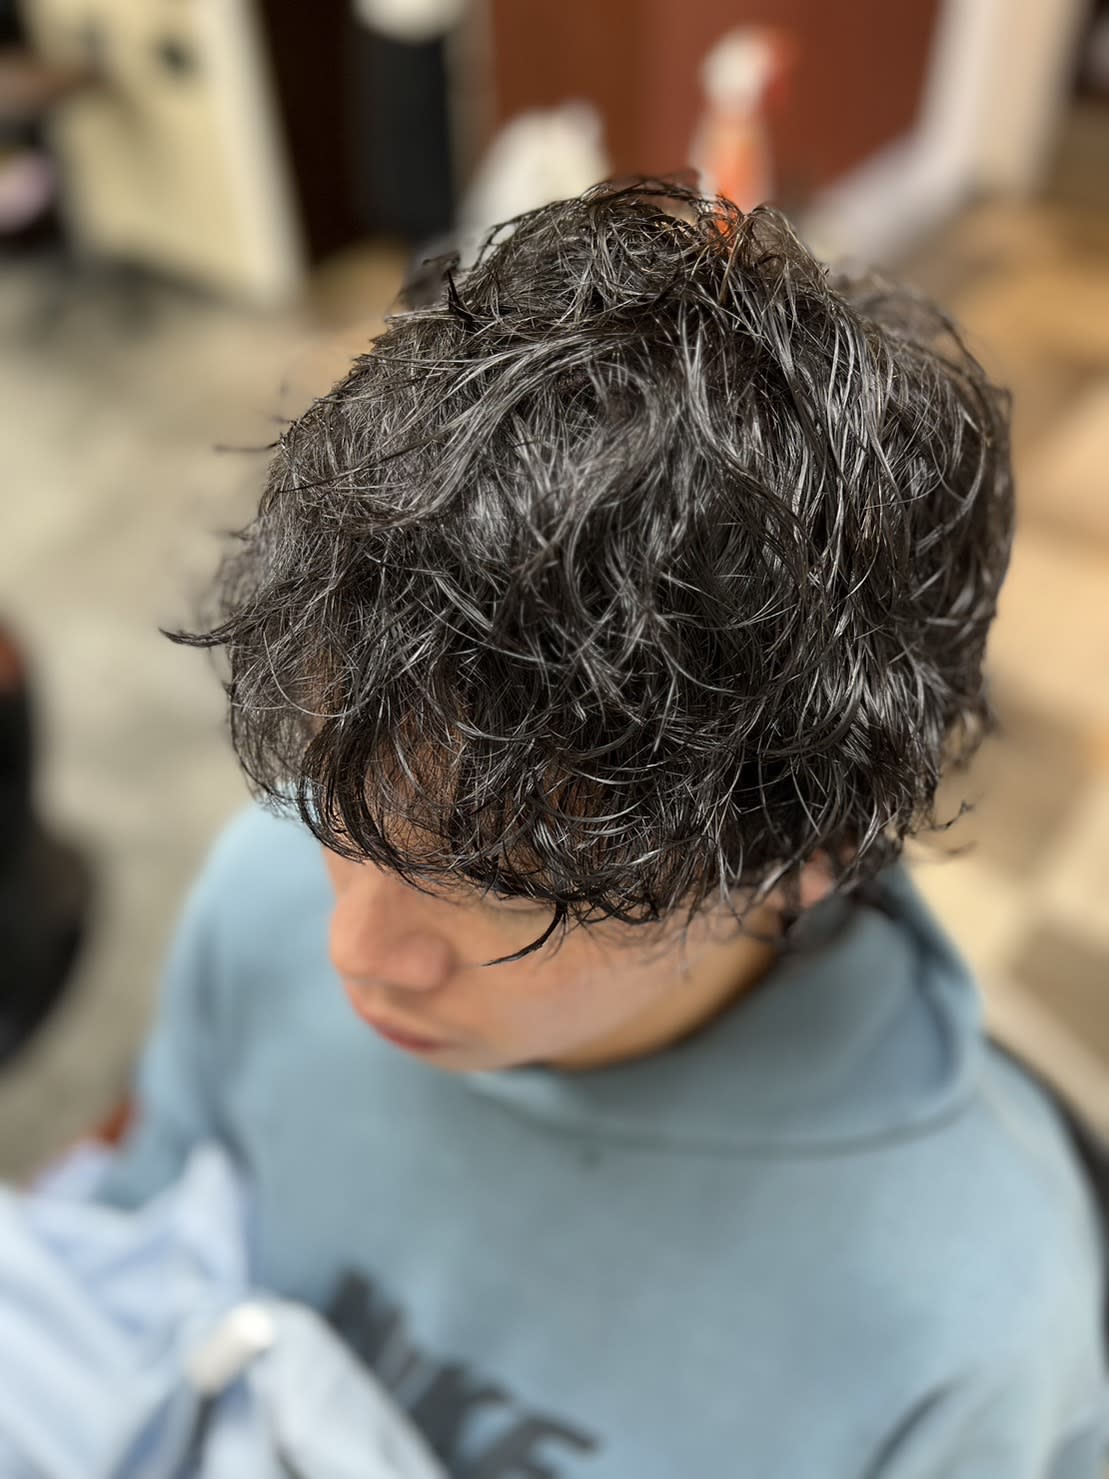 Grooming&Hair Salon SKY【スカイ】のスタイル紹介。マニャガハ島のサンセットの様な大人アンニュイパーマ